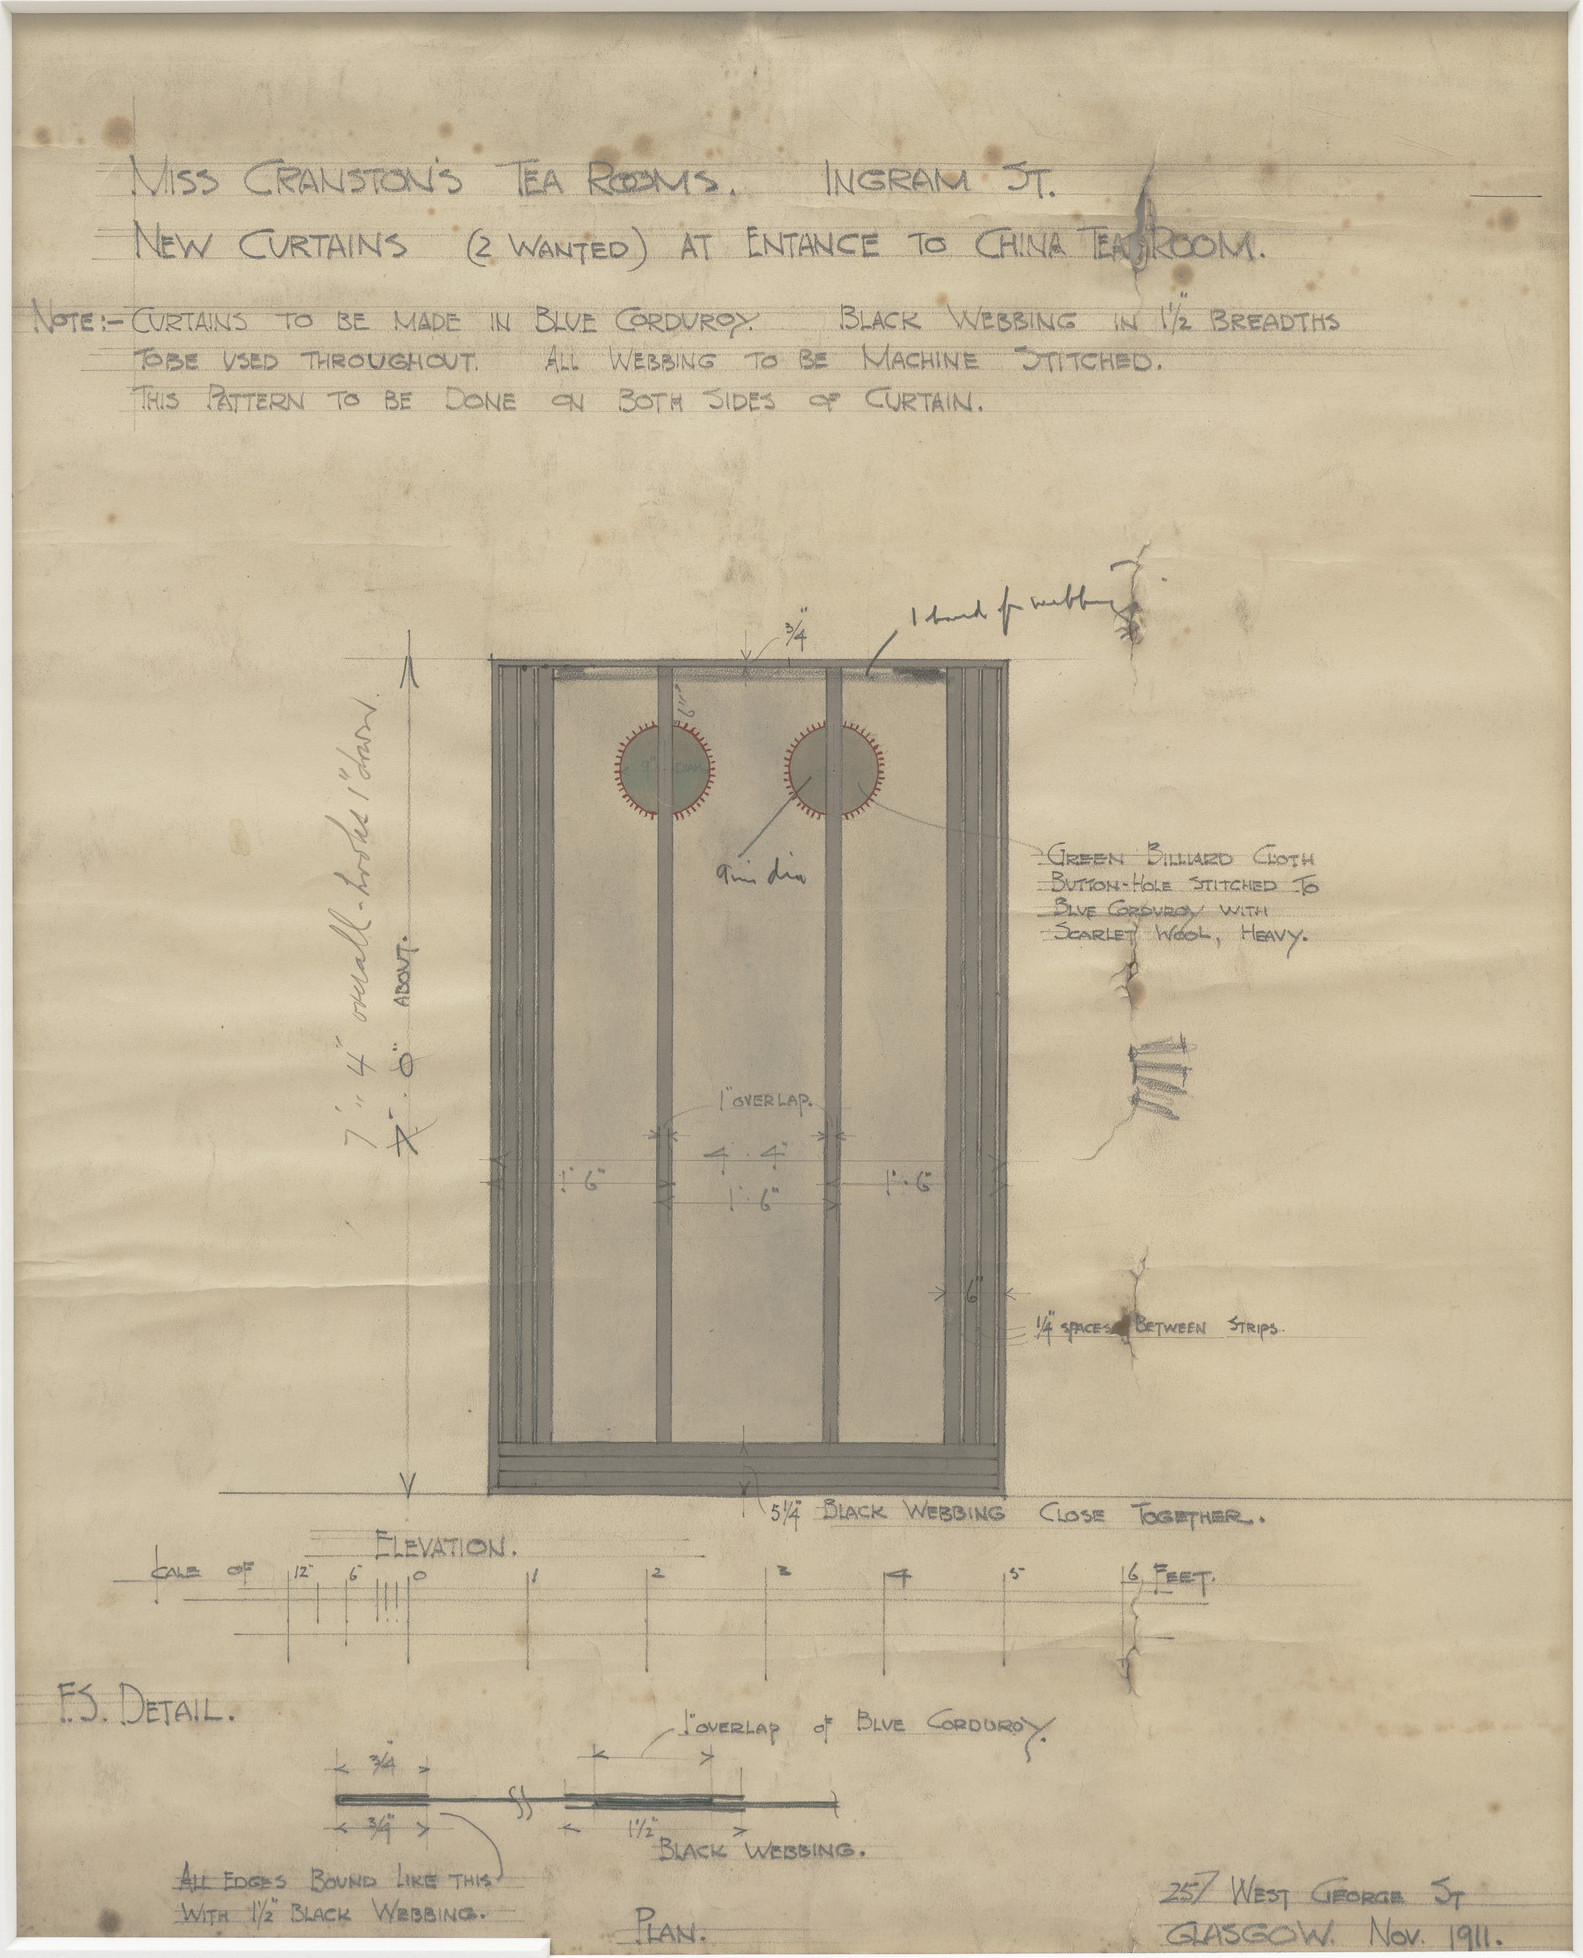 Charles Rennie Mackintosh. Curtain design for Miss Cranston's Tea Room. 1911